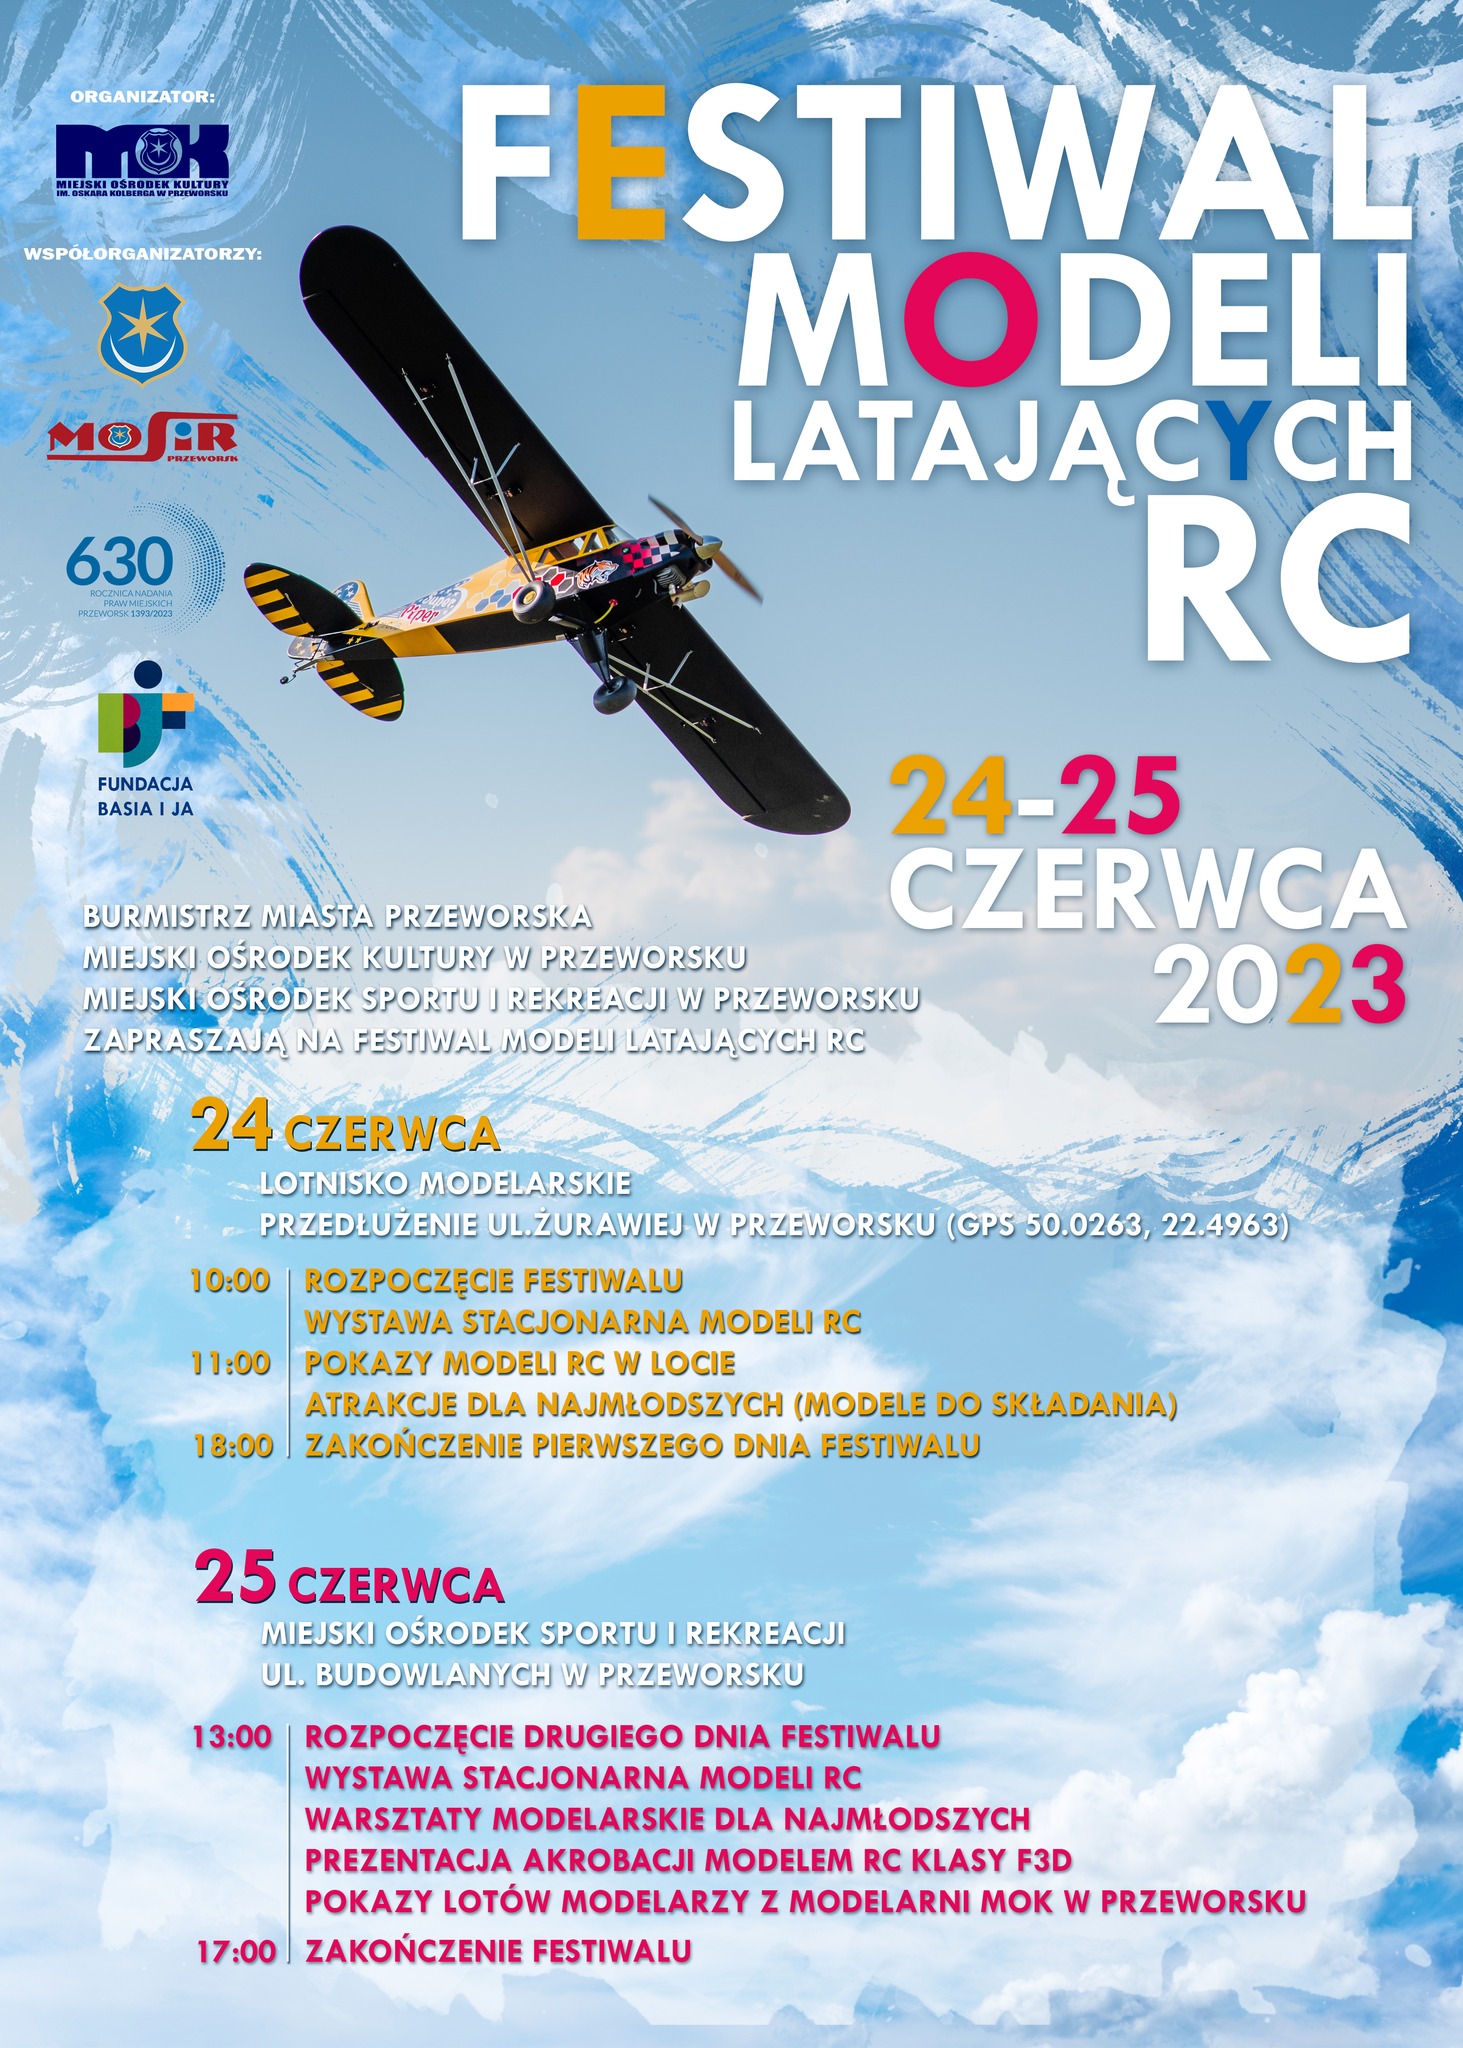 Festiwal modeli latający RC